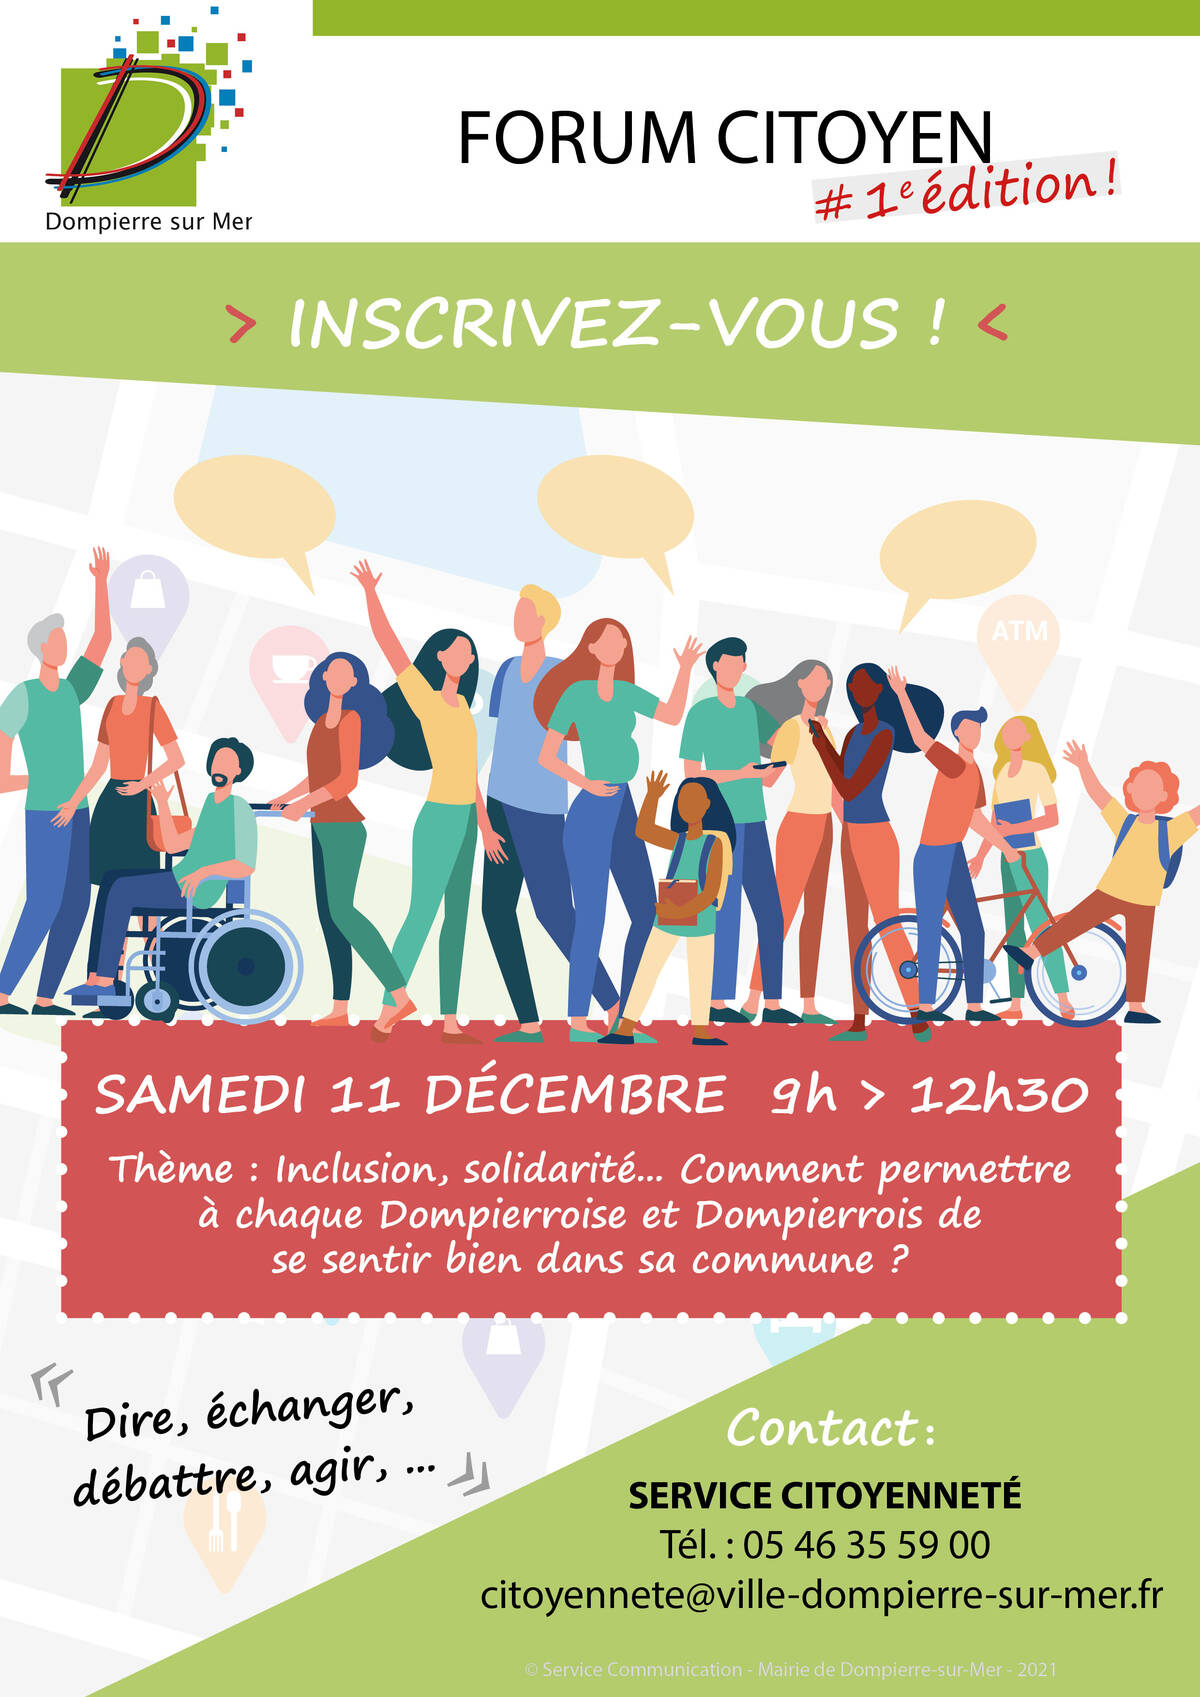 Forum Citoyen "Inclusion, solidarité"